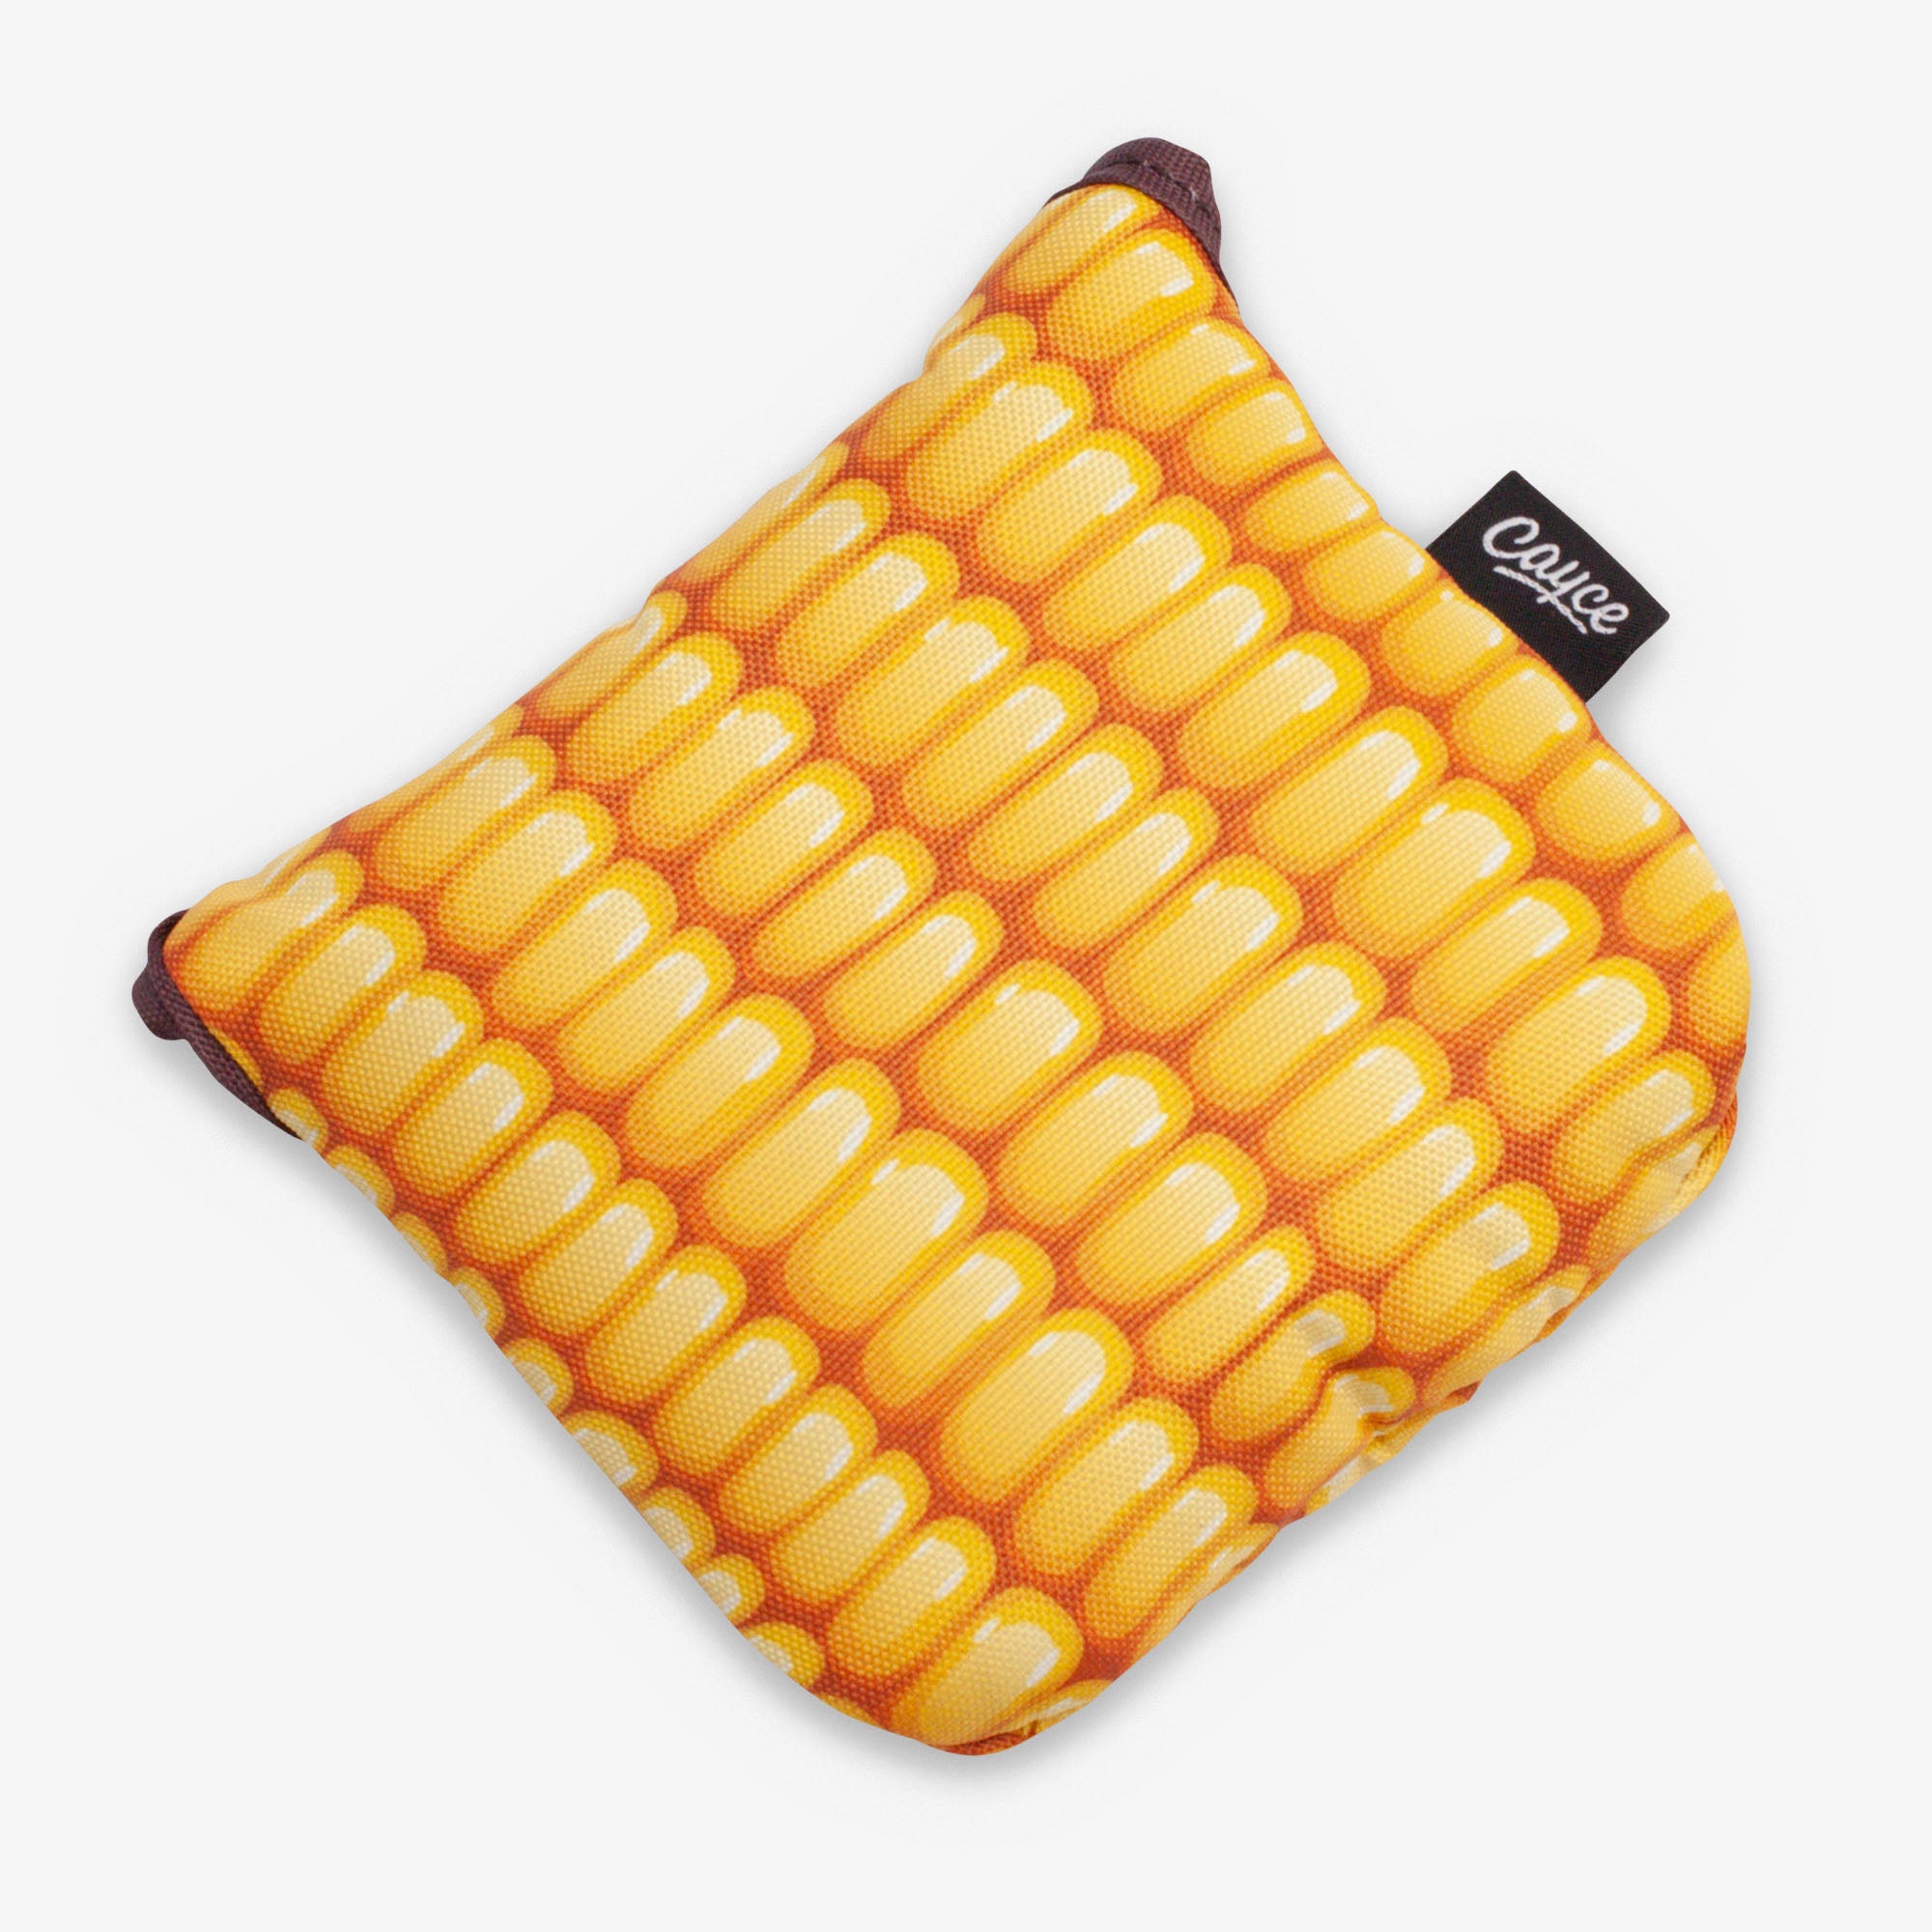 It's Corn! Mallet Putter Cover DURA+